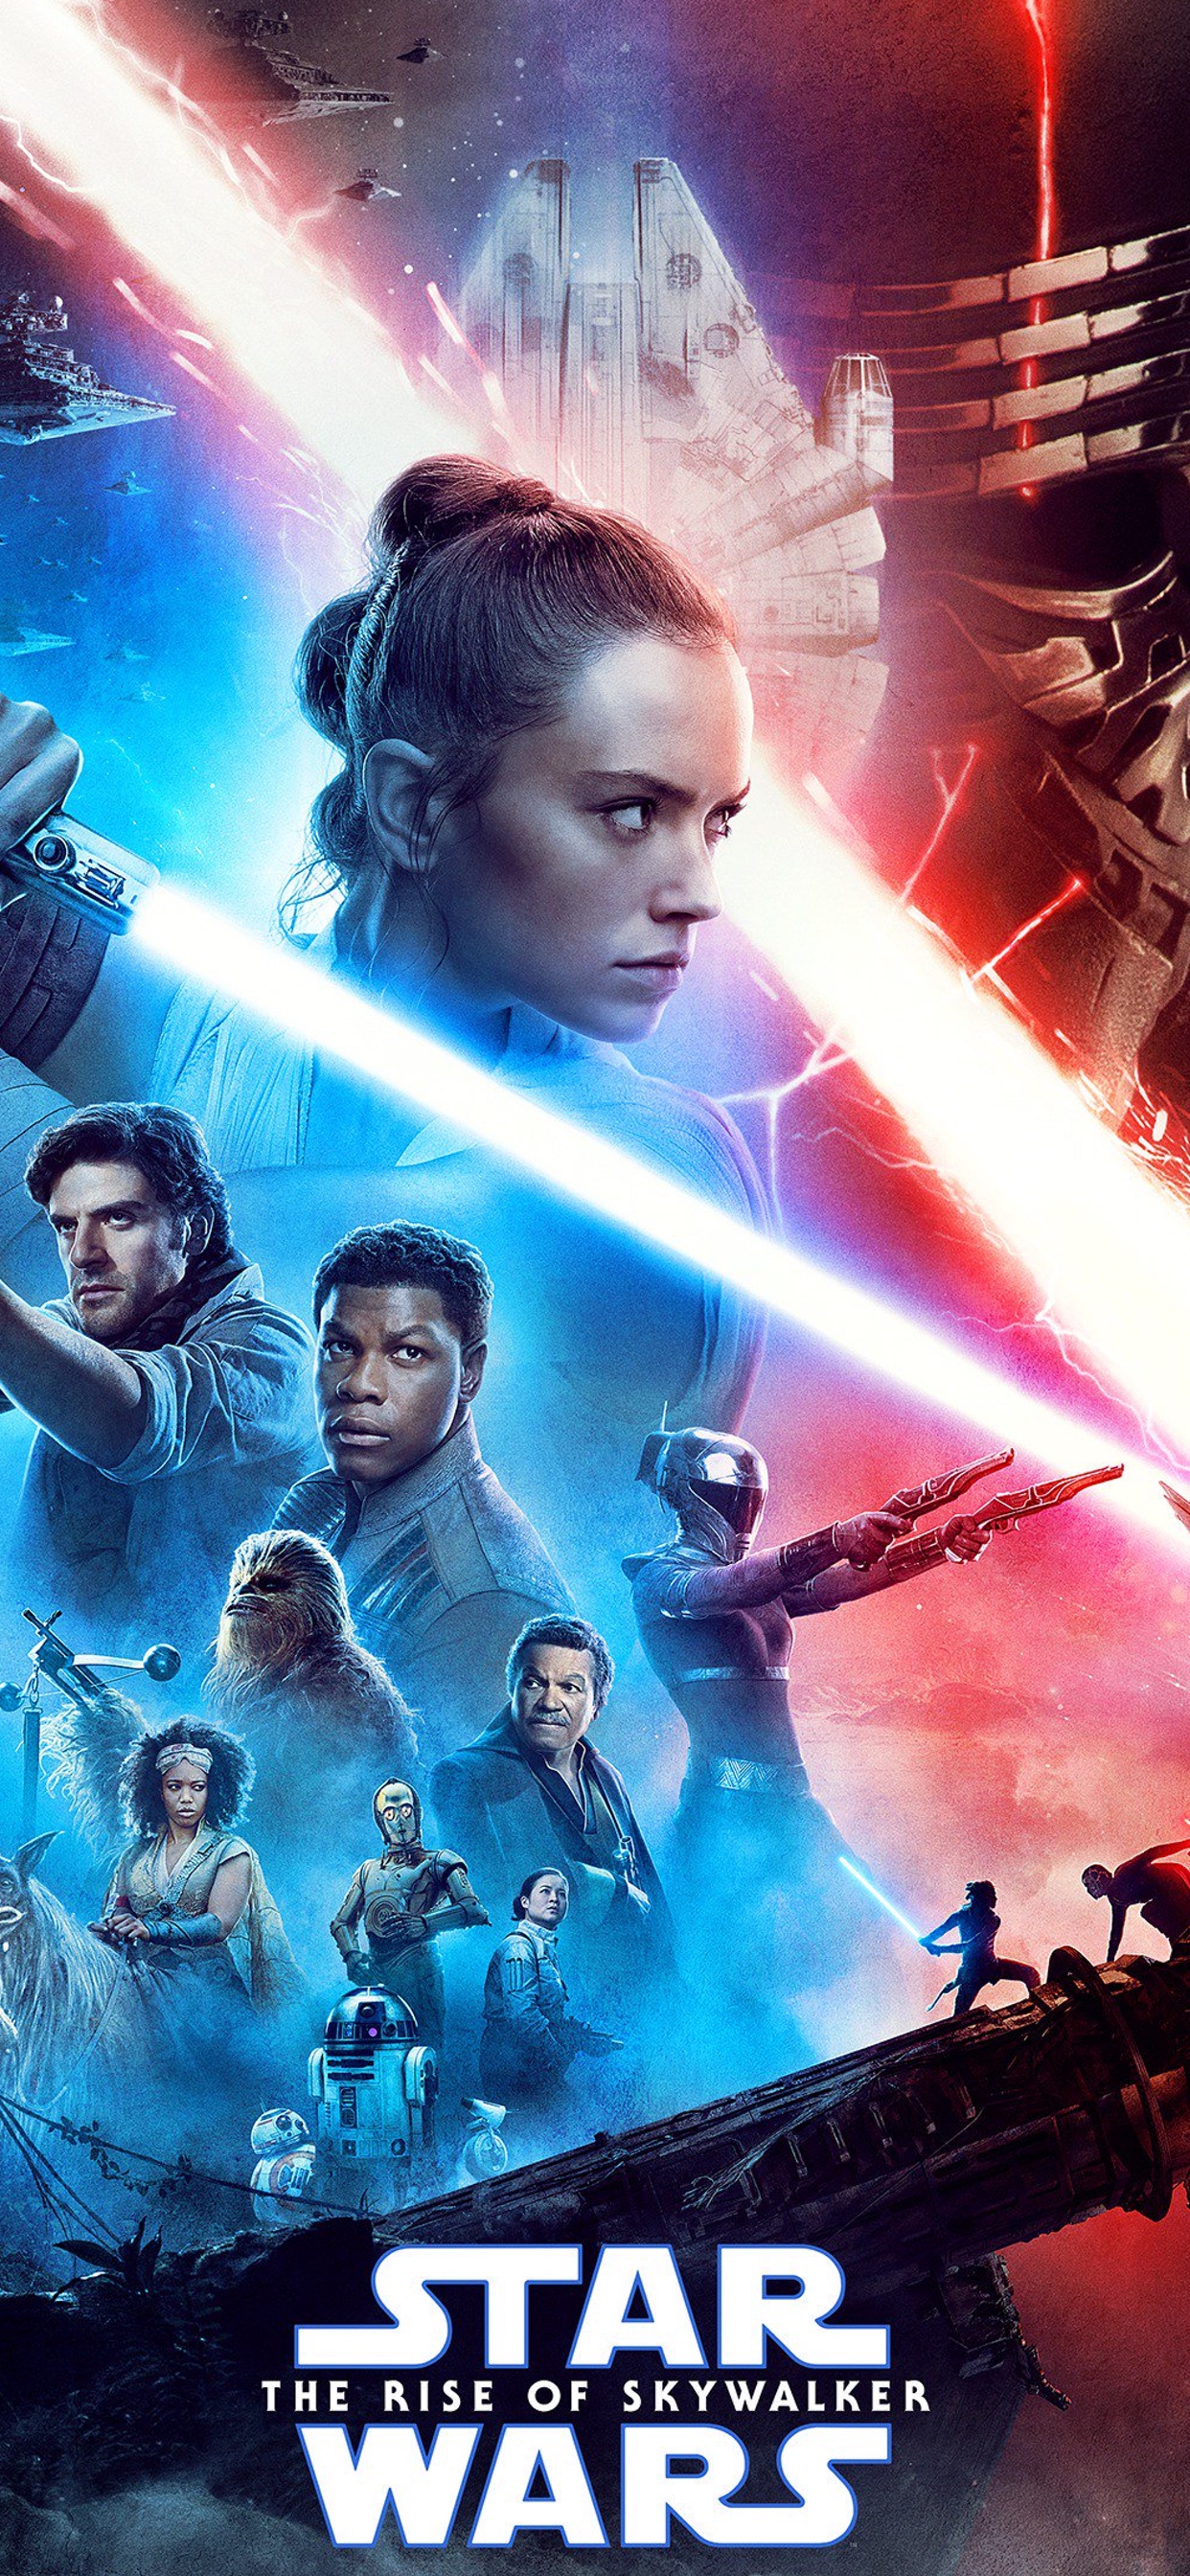 Star Wars Rise of Skywalker Poster iPhone wallpaper